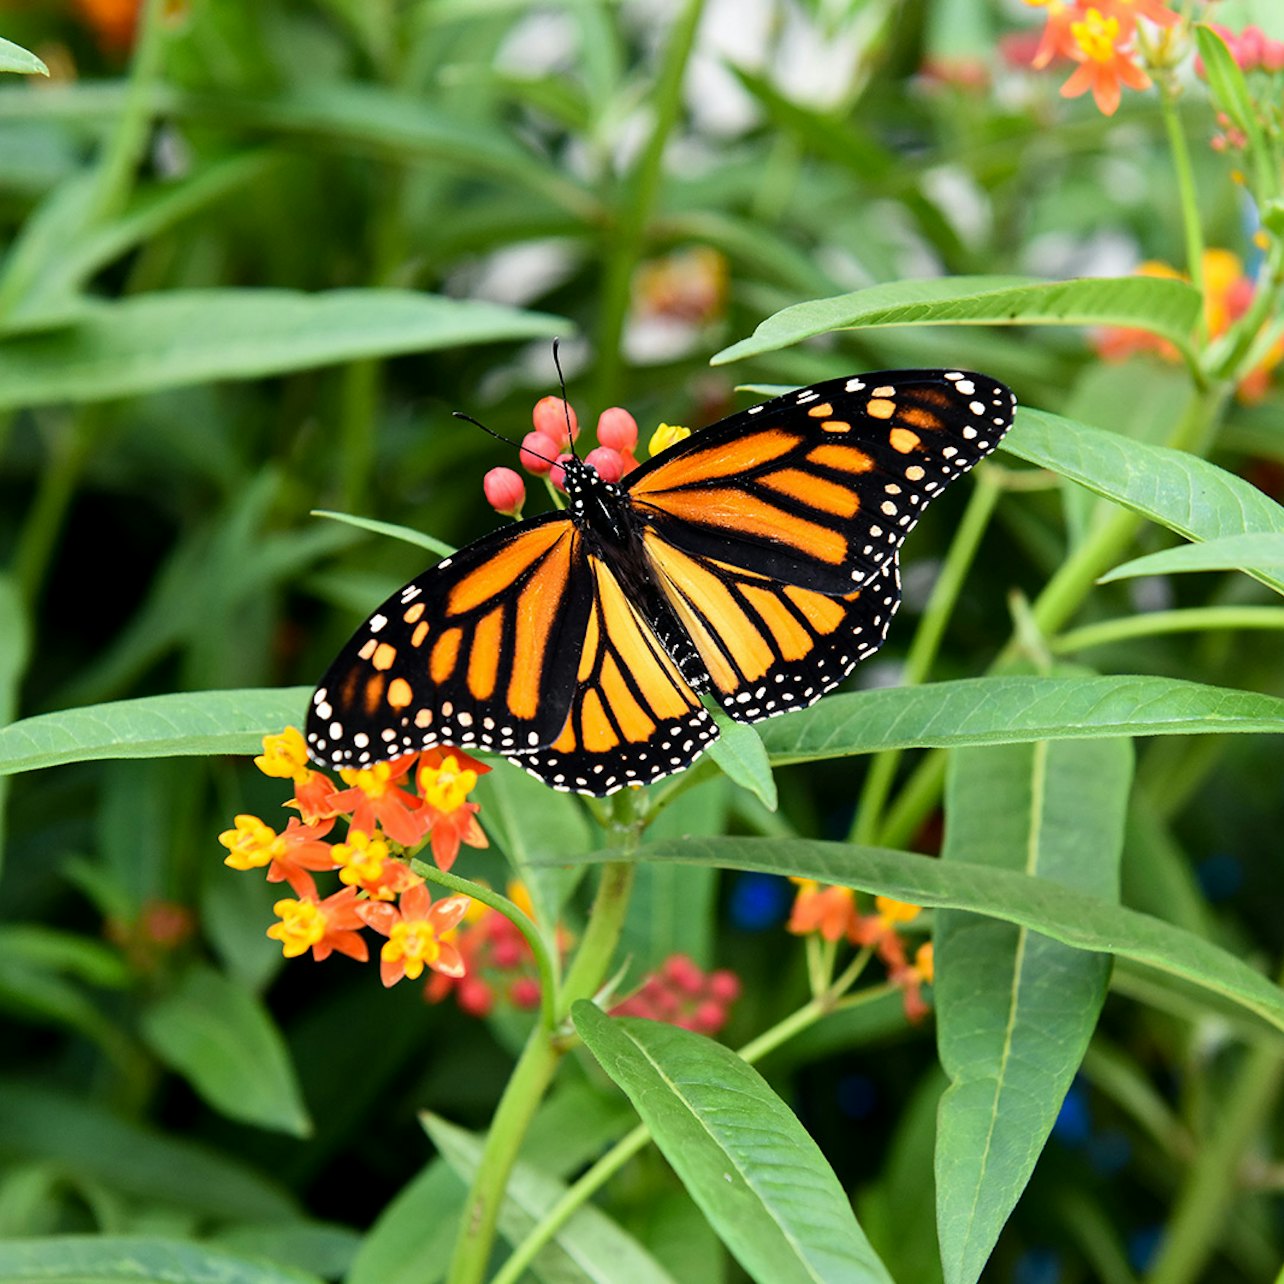 Niagara Falls Butterfly Conservatory - Alloggi in Cascate del Niagara